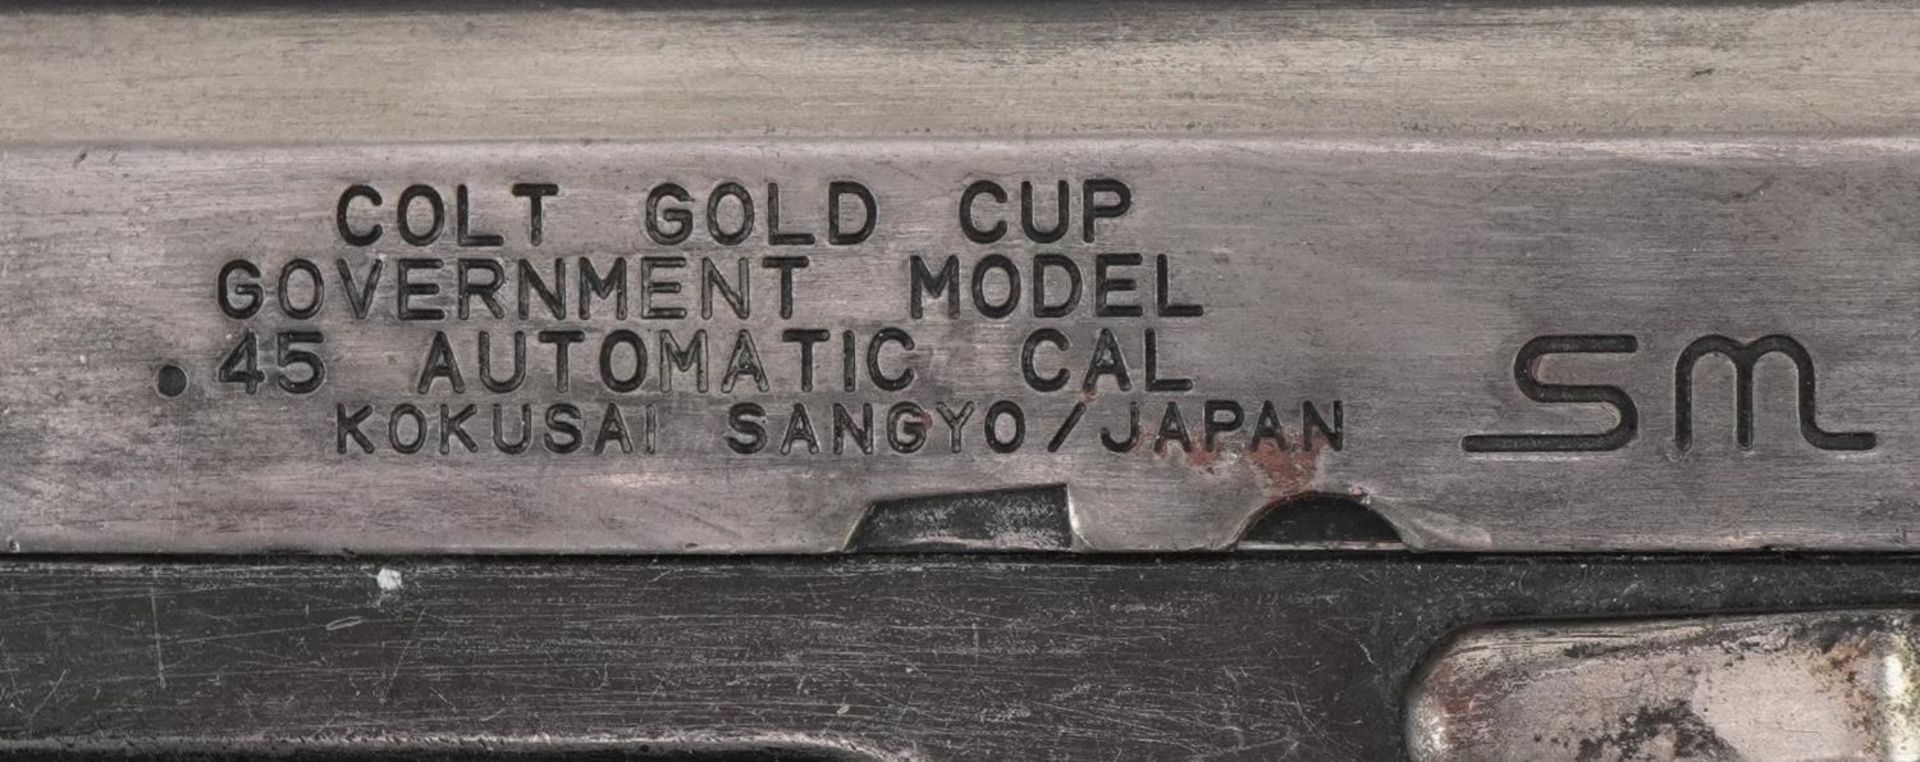 Decorative model of a Colt Gold Cup government model .45 automatic cal pistol by Kokusai Japan, 21. - Bild 2 aus 4